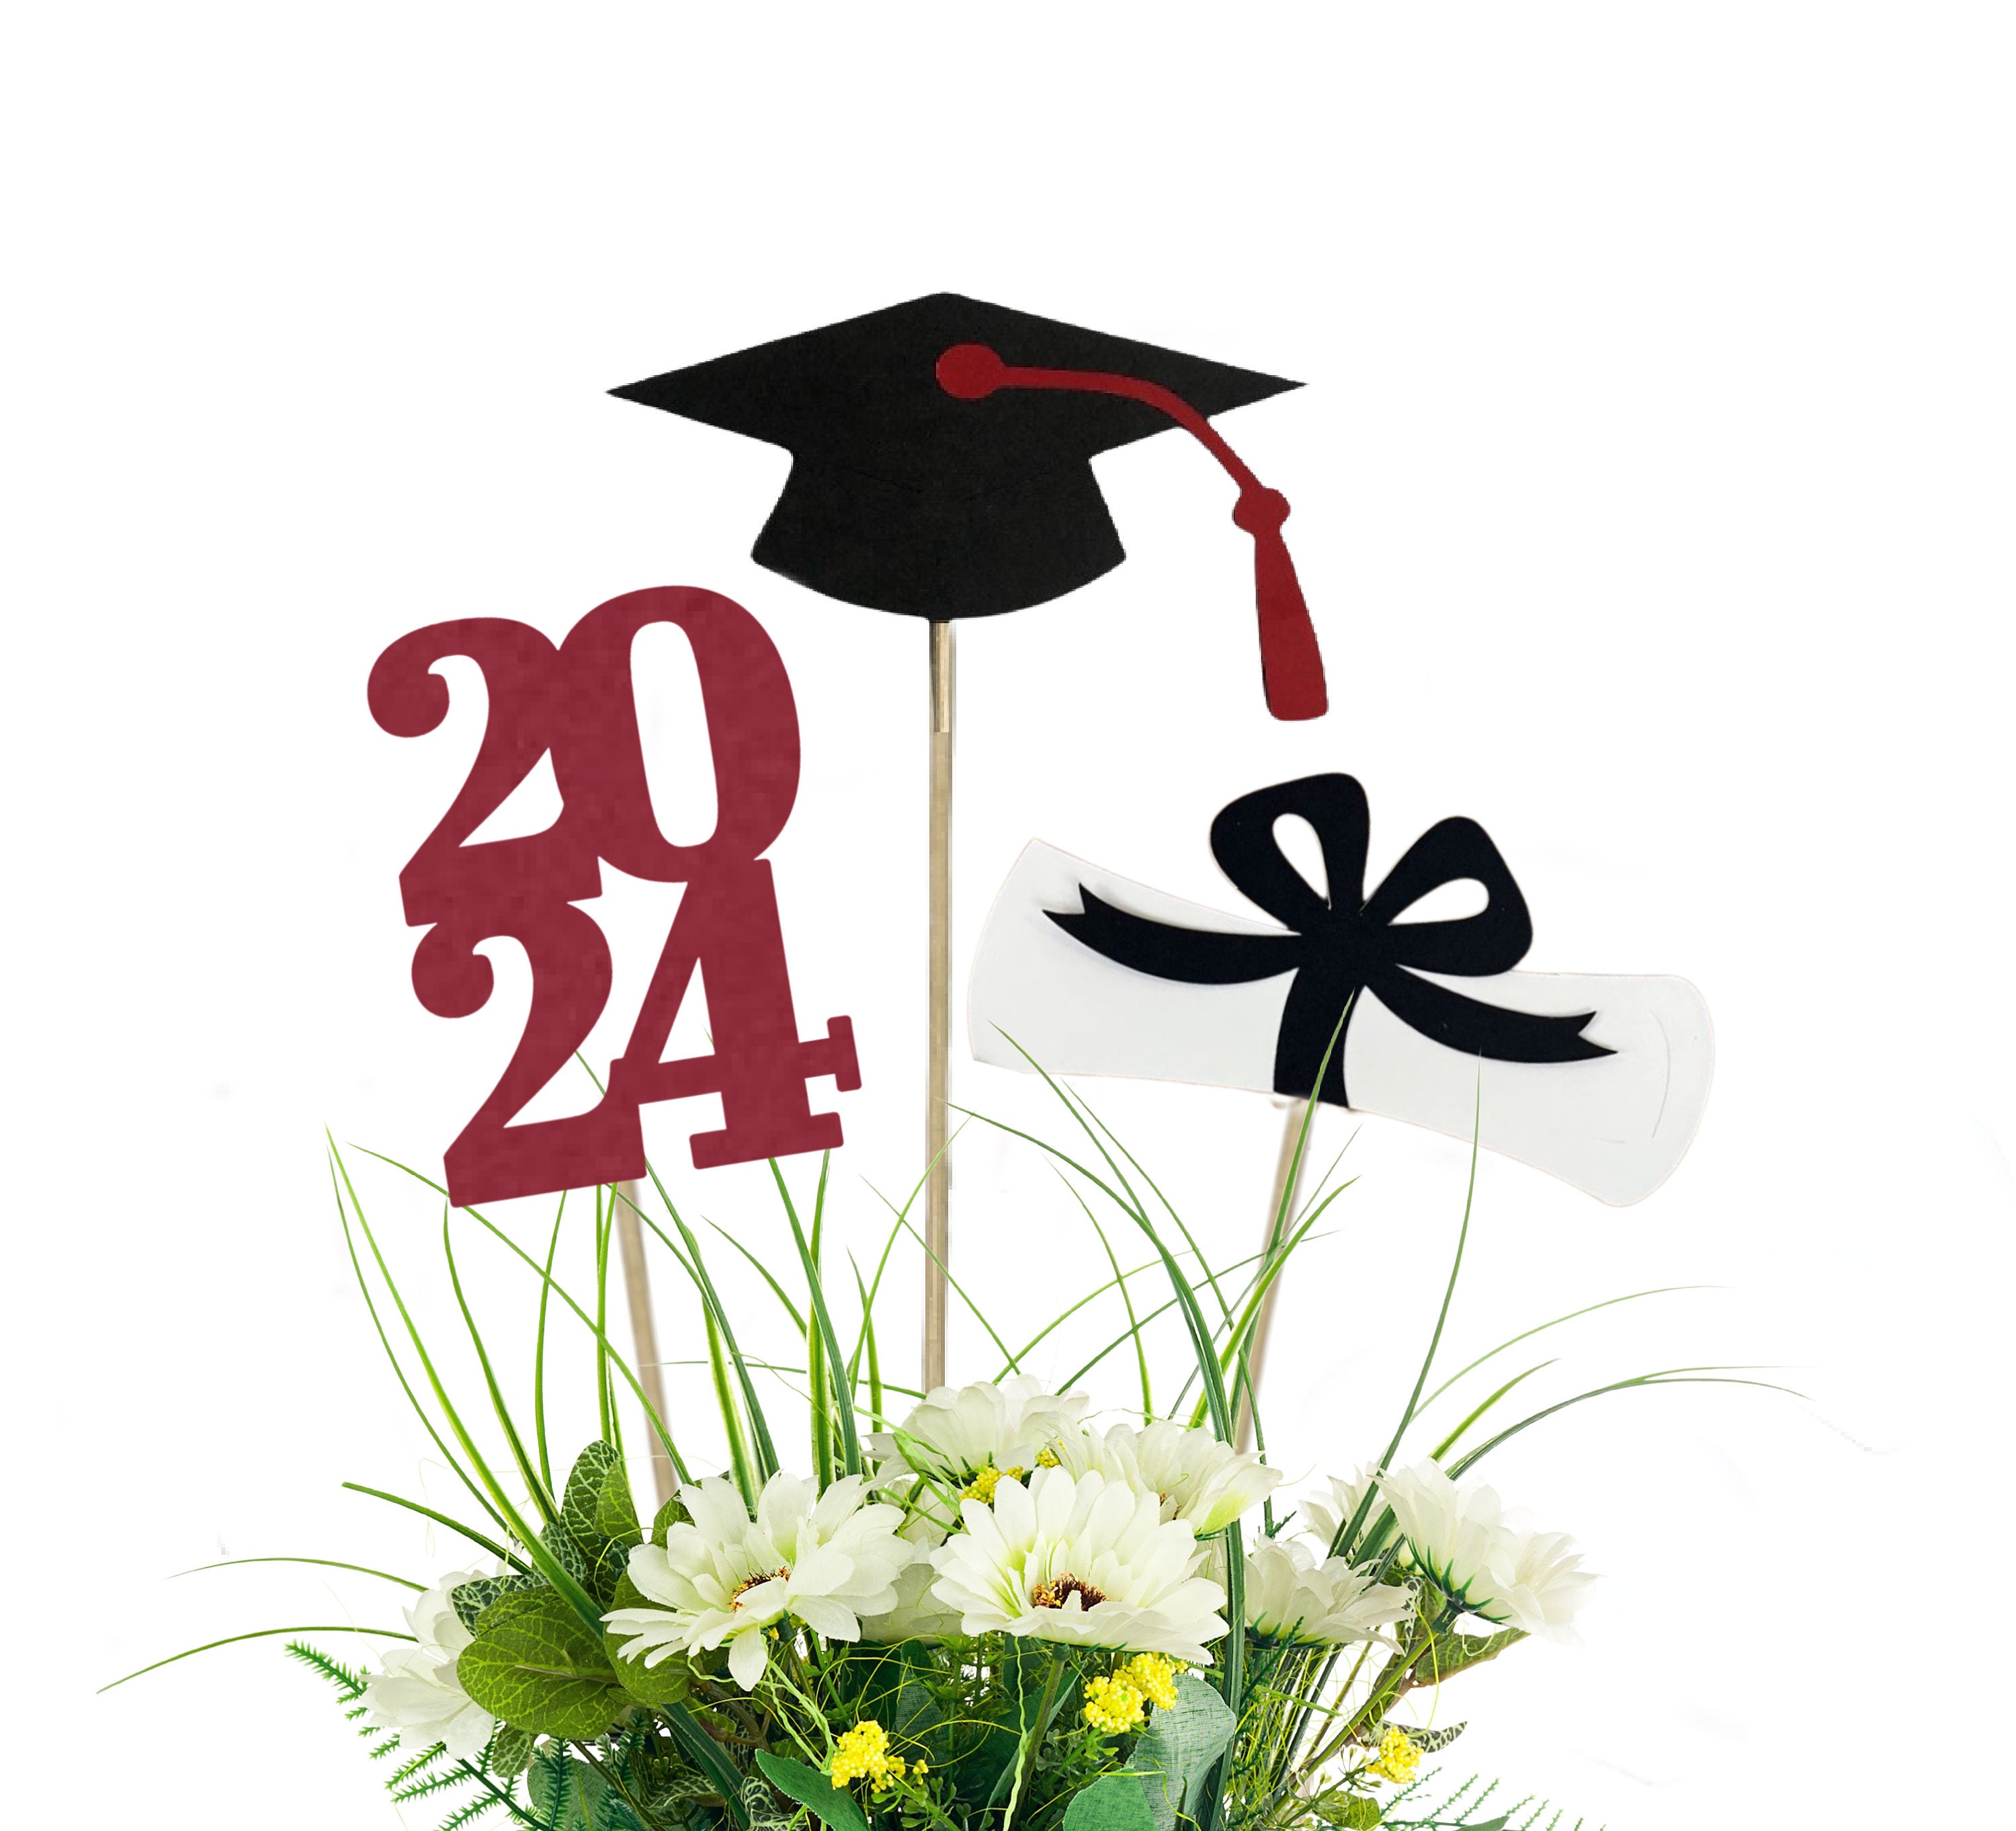 2024 Factory Gold Graduation Tassel for University/Graduation Party - China Graduation  Tassel and Honor Tassel price